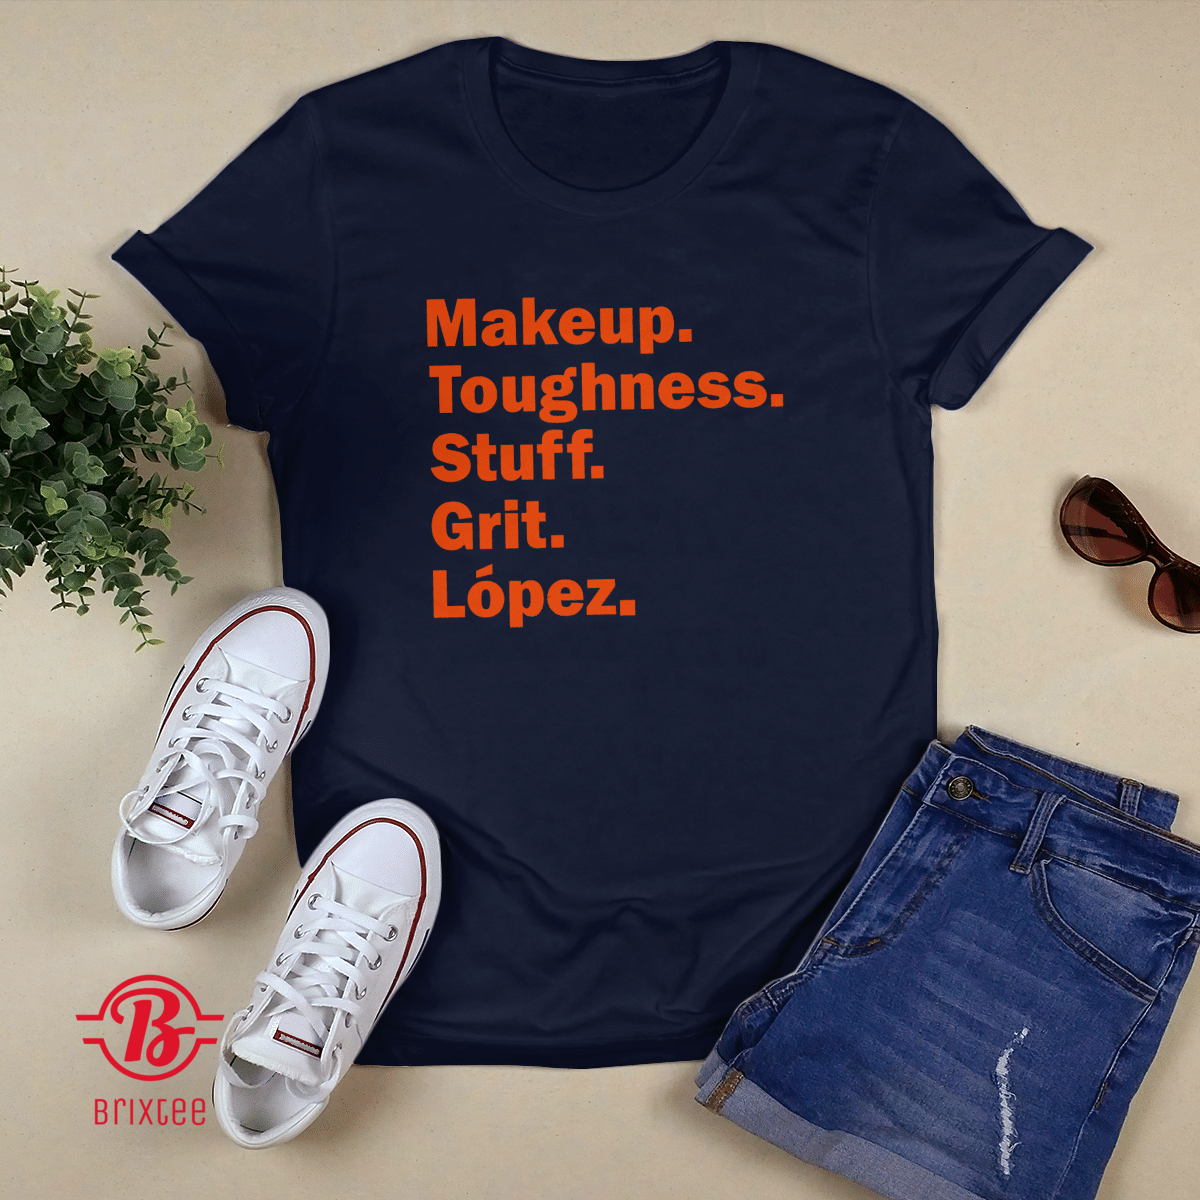 Makeup. Toughness. Stuff. Grit. Jorge lópez. | Baltimore Orioles